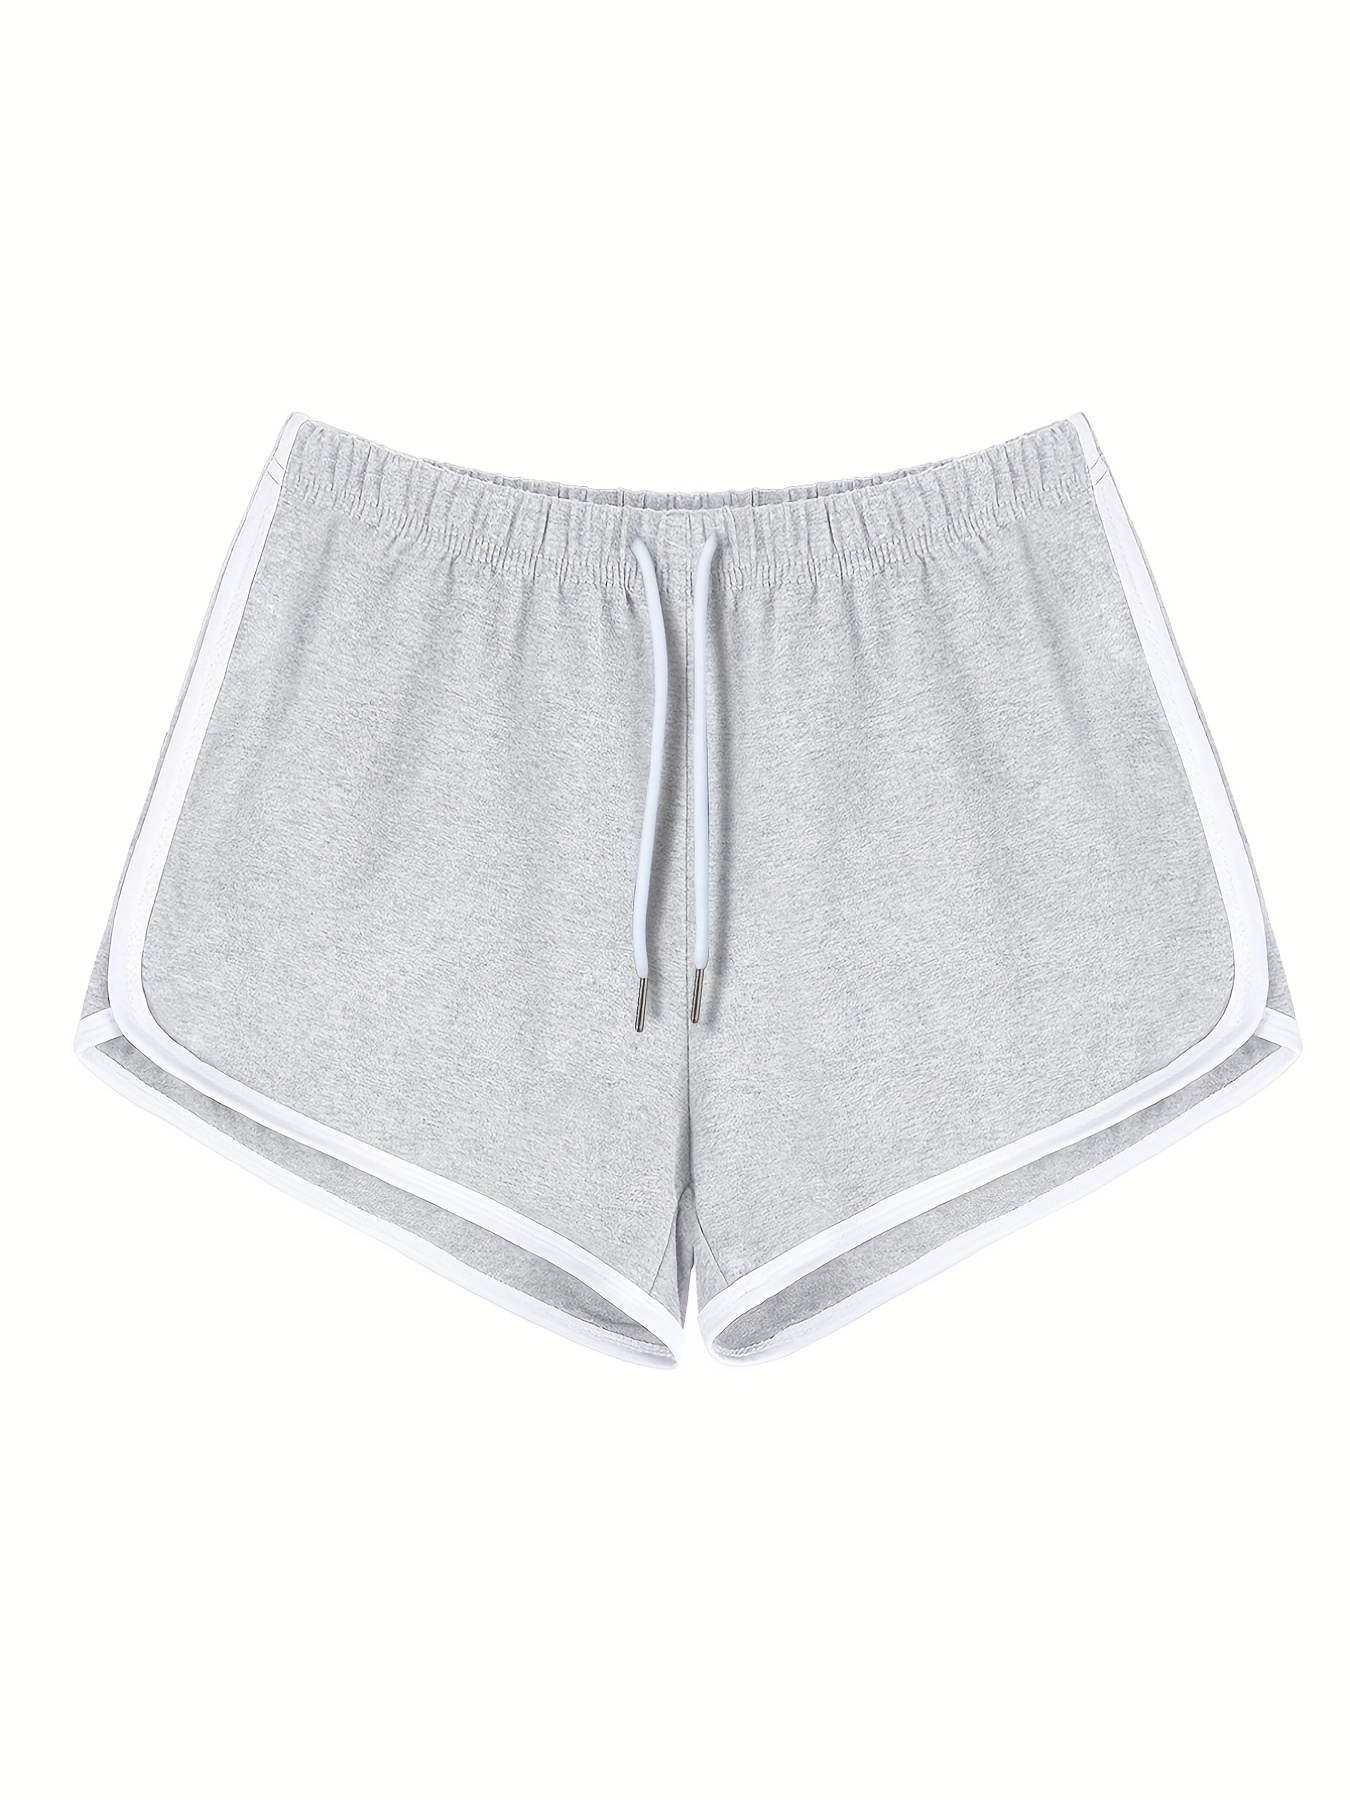 shoactive, Shorts, Shoactive Cute Workout Shorts Wpockets Pink And  Charcoal Grey Soft Large